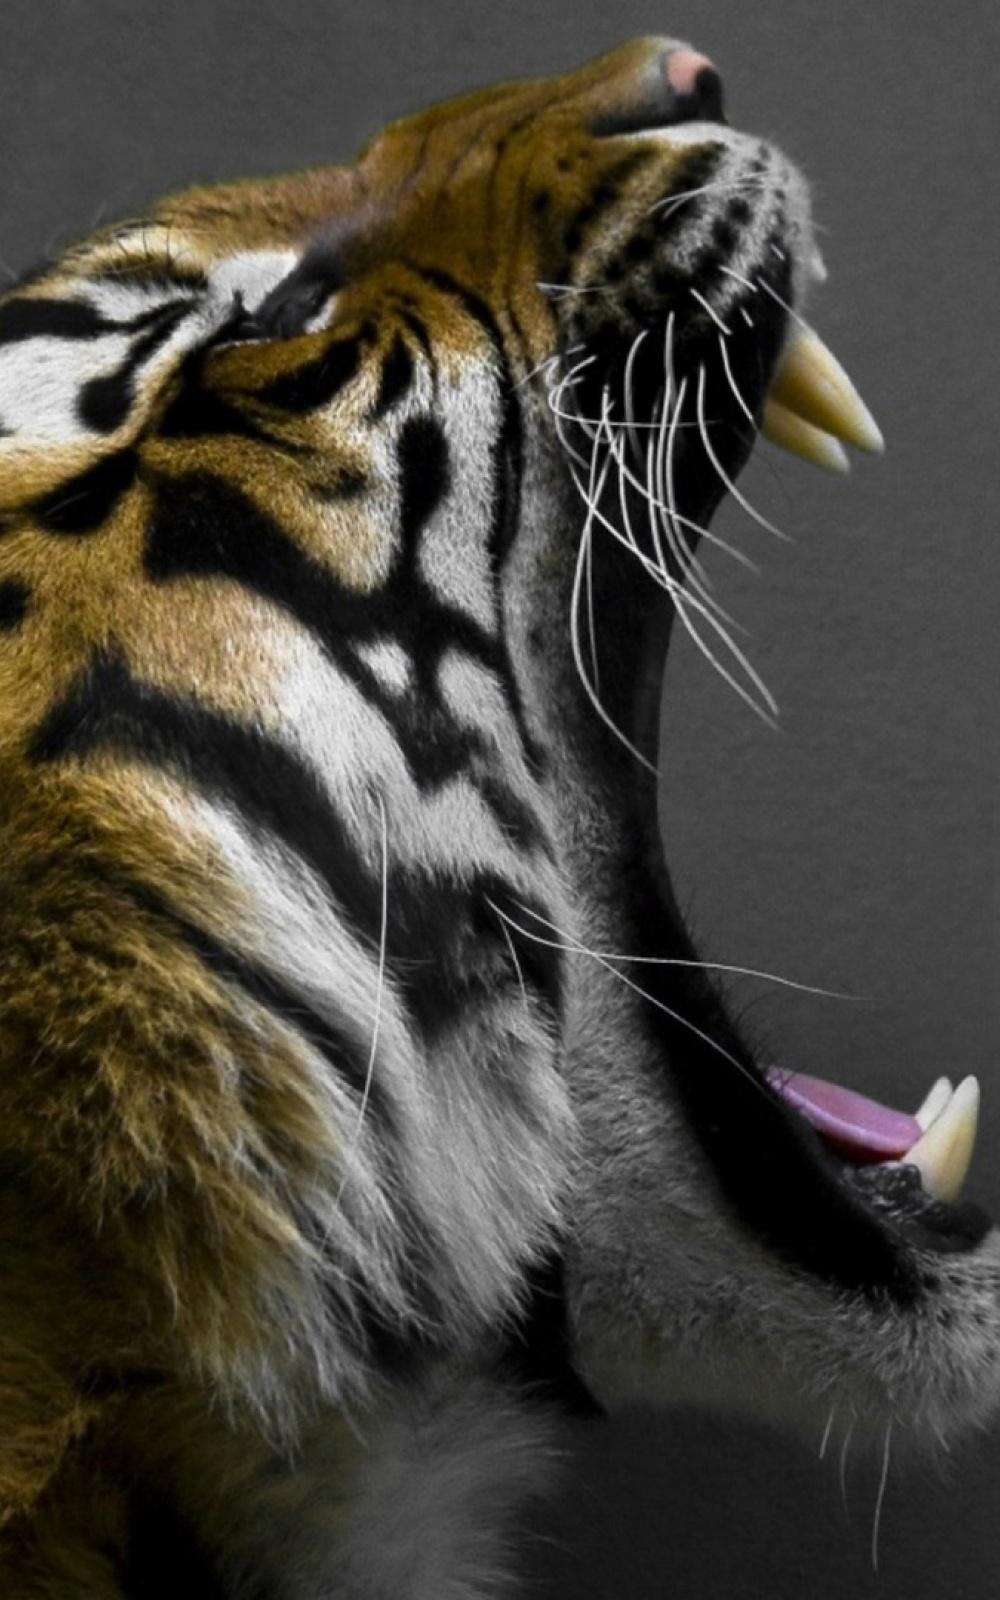 Tiger Roar Lockscreen Android Wallpaper free download